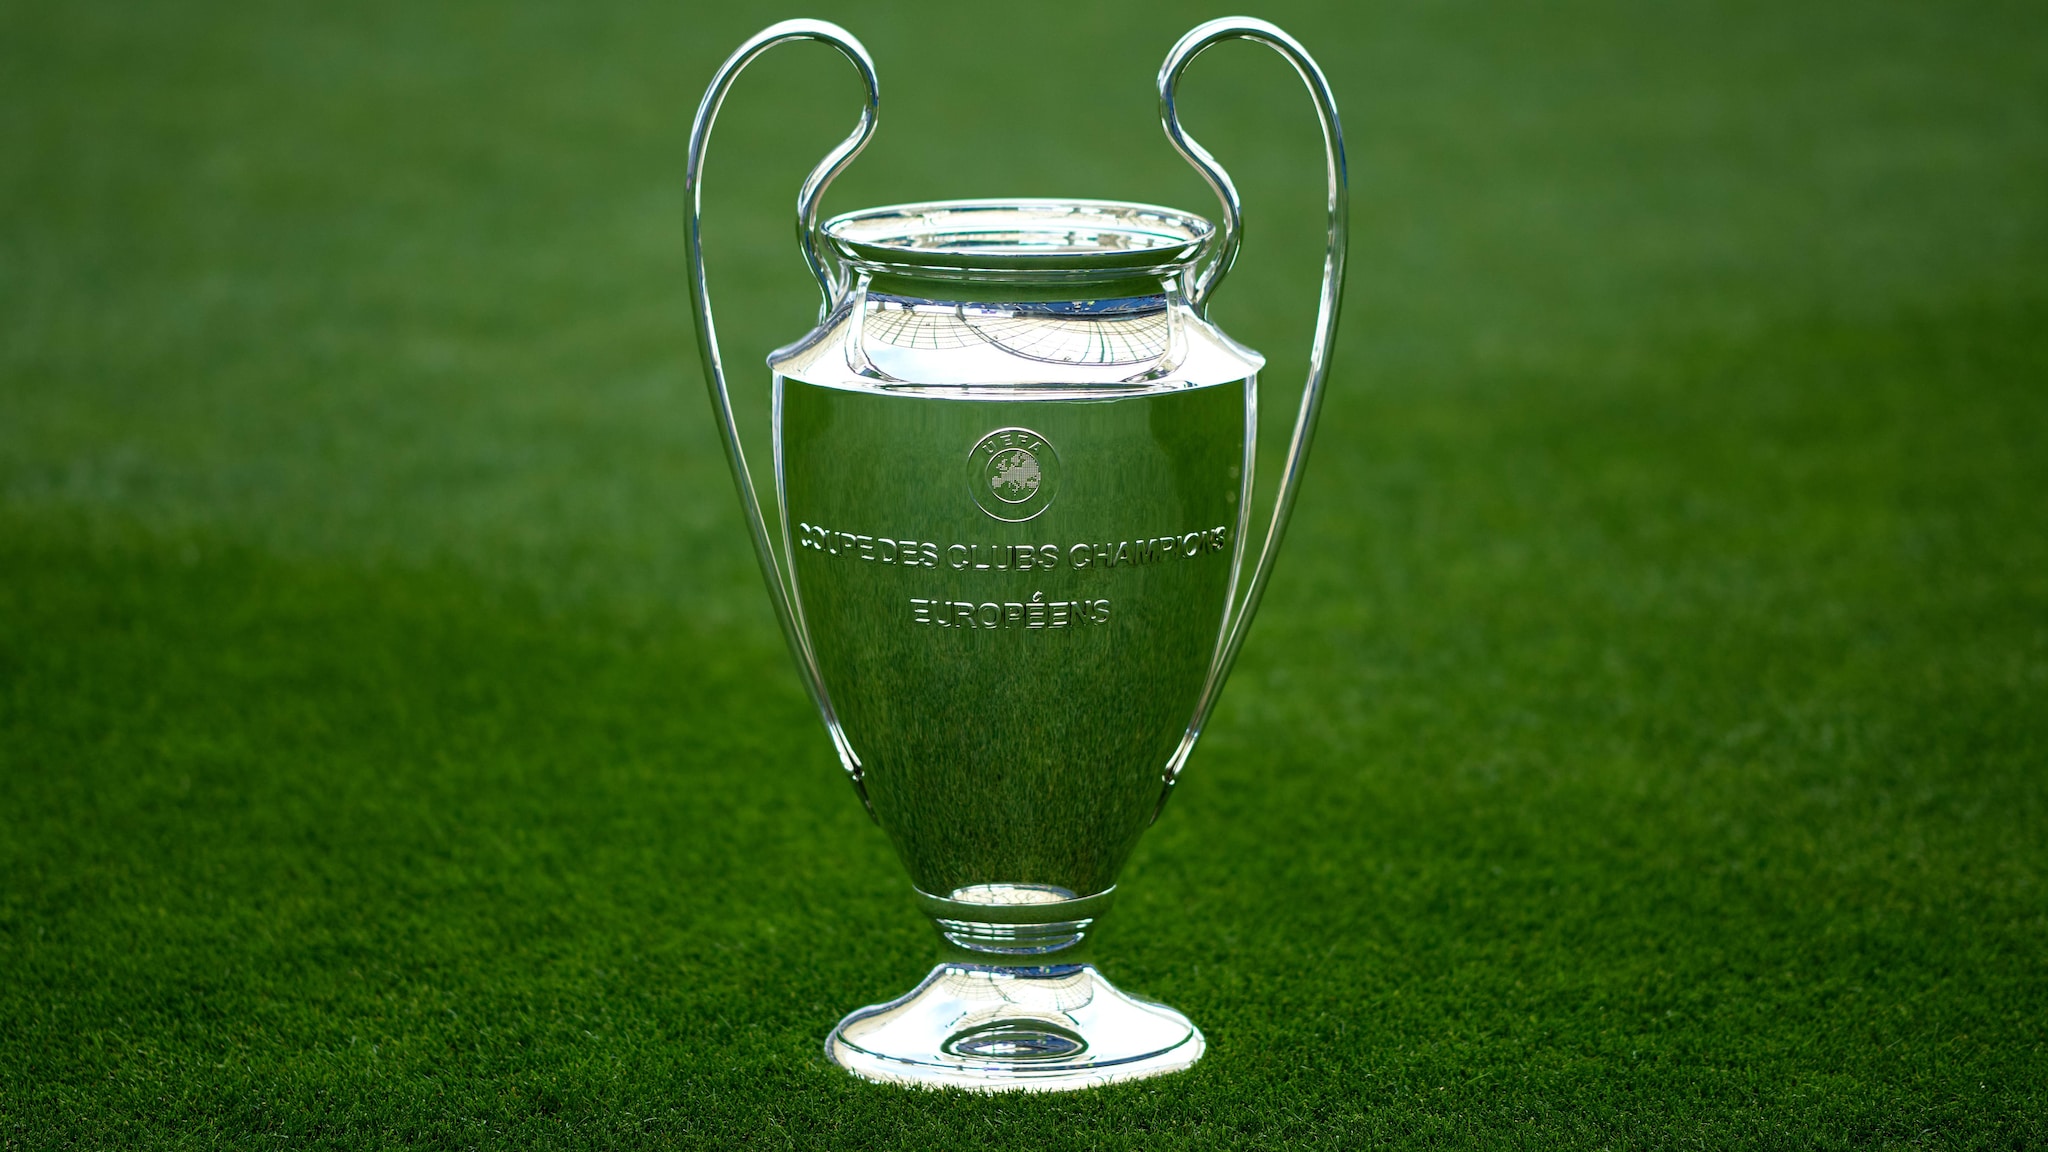 2022/23 UEFA Champions League: Matches, draws, | Champions League UEFA.com